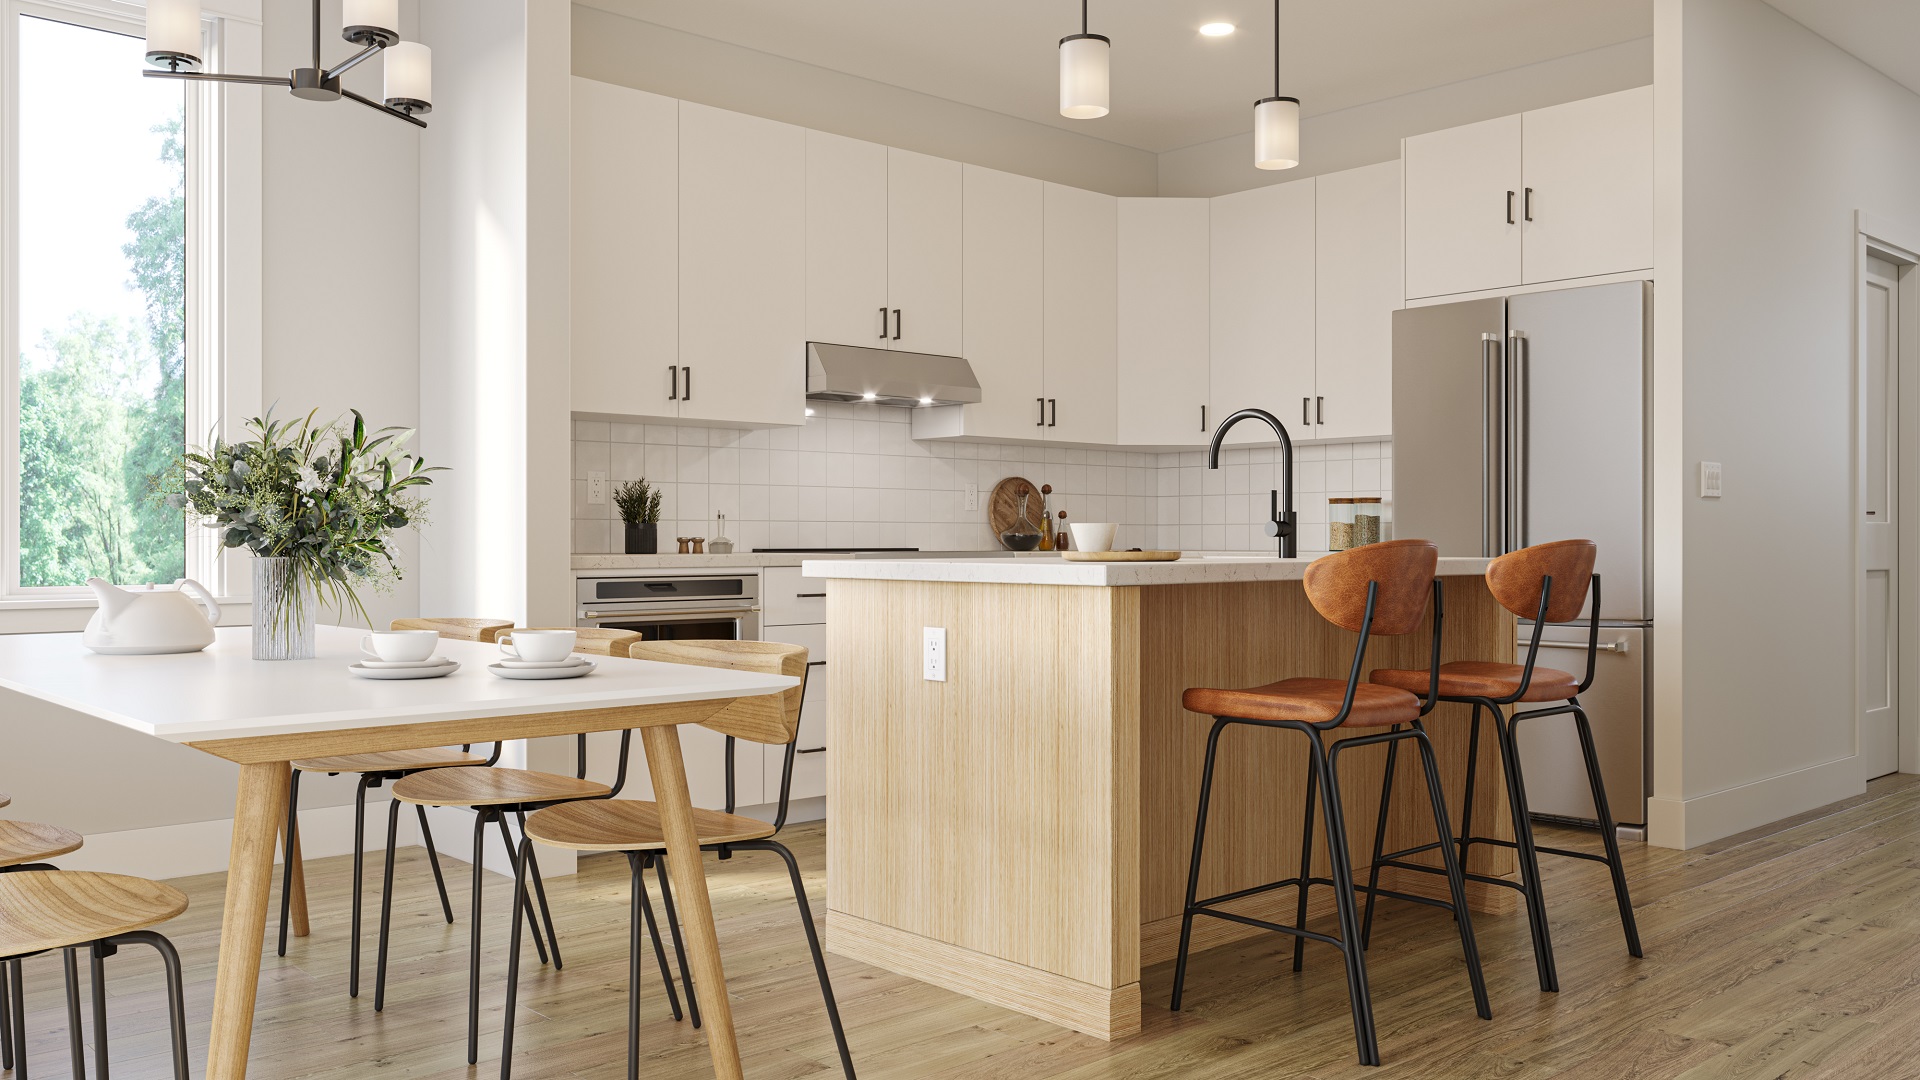 Energy-efficient Homes 3D Rendering: Modern Kitchen Interior